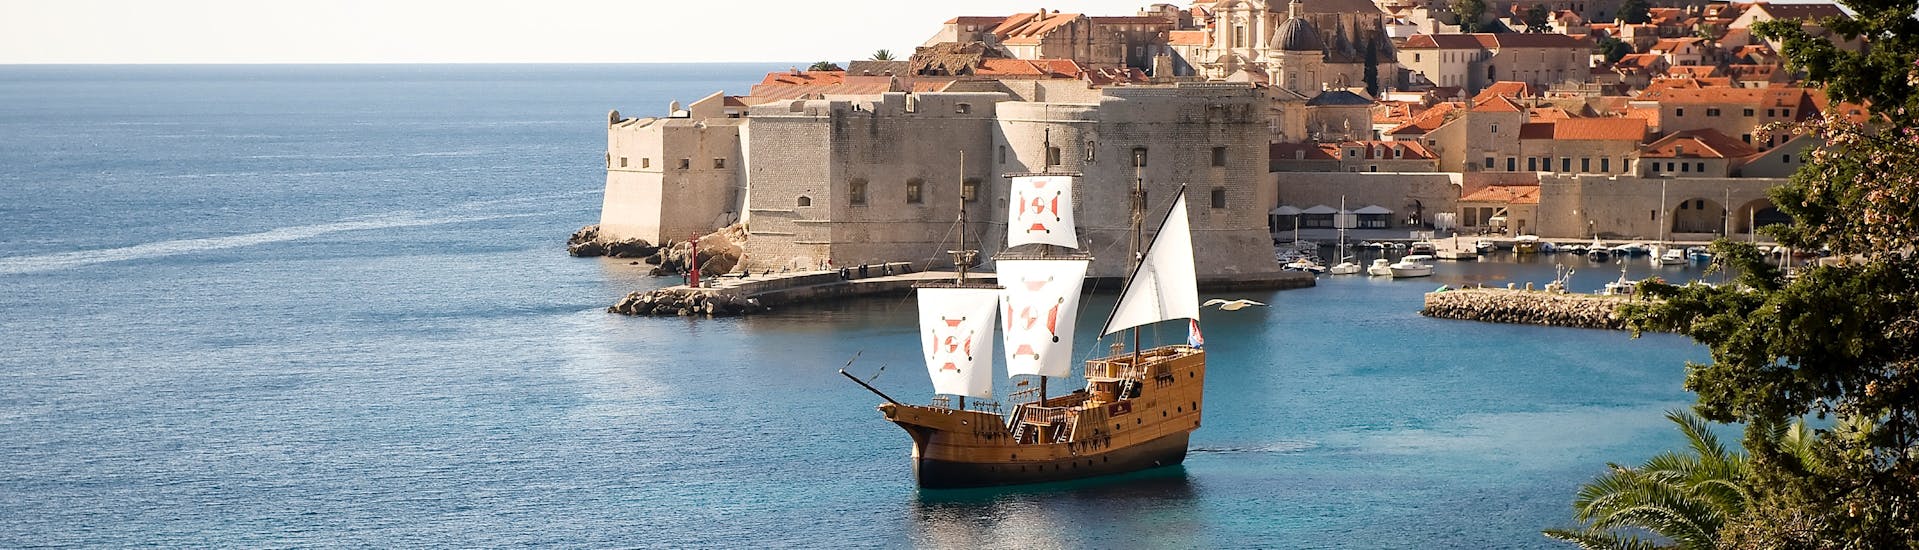 The traditional Karaka boat on the water before the sunset with Karaka Dubrovnik.